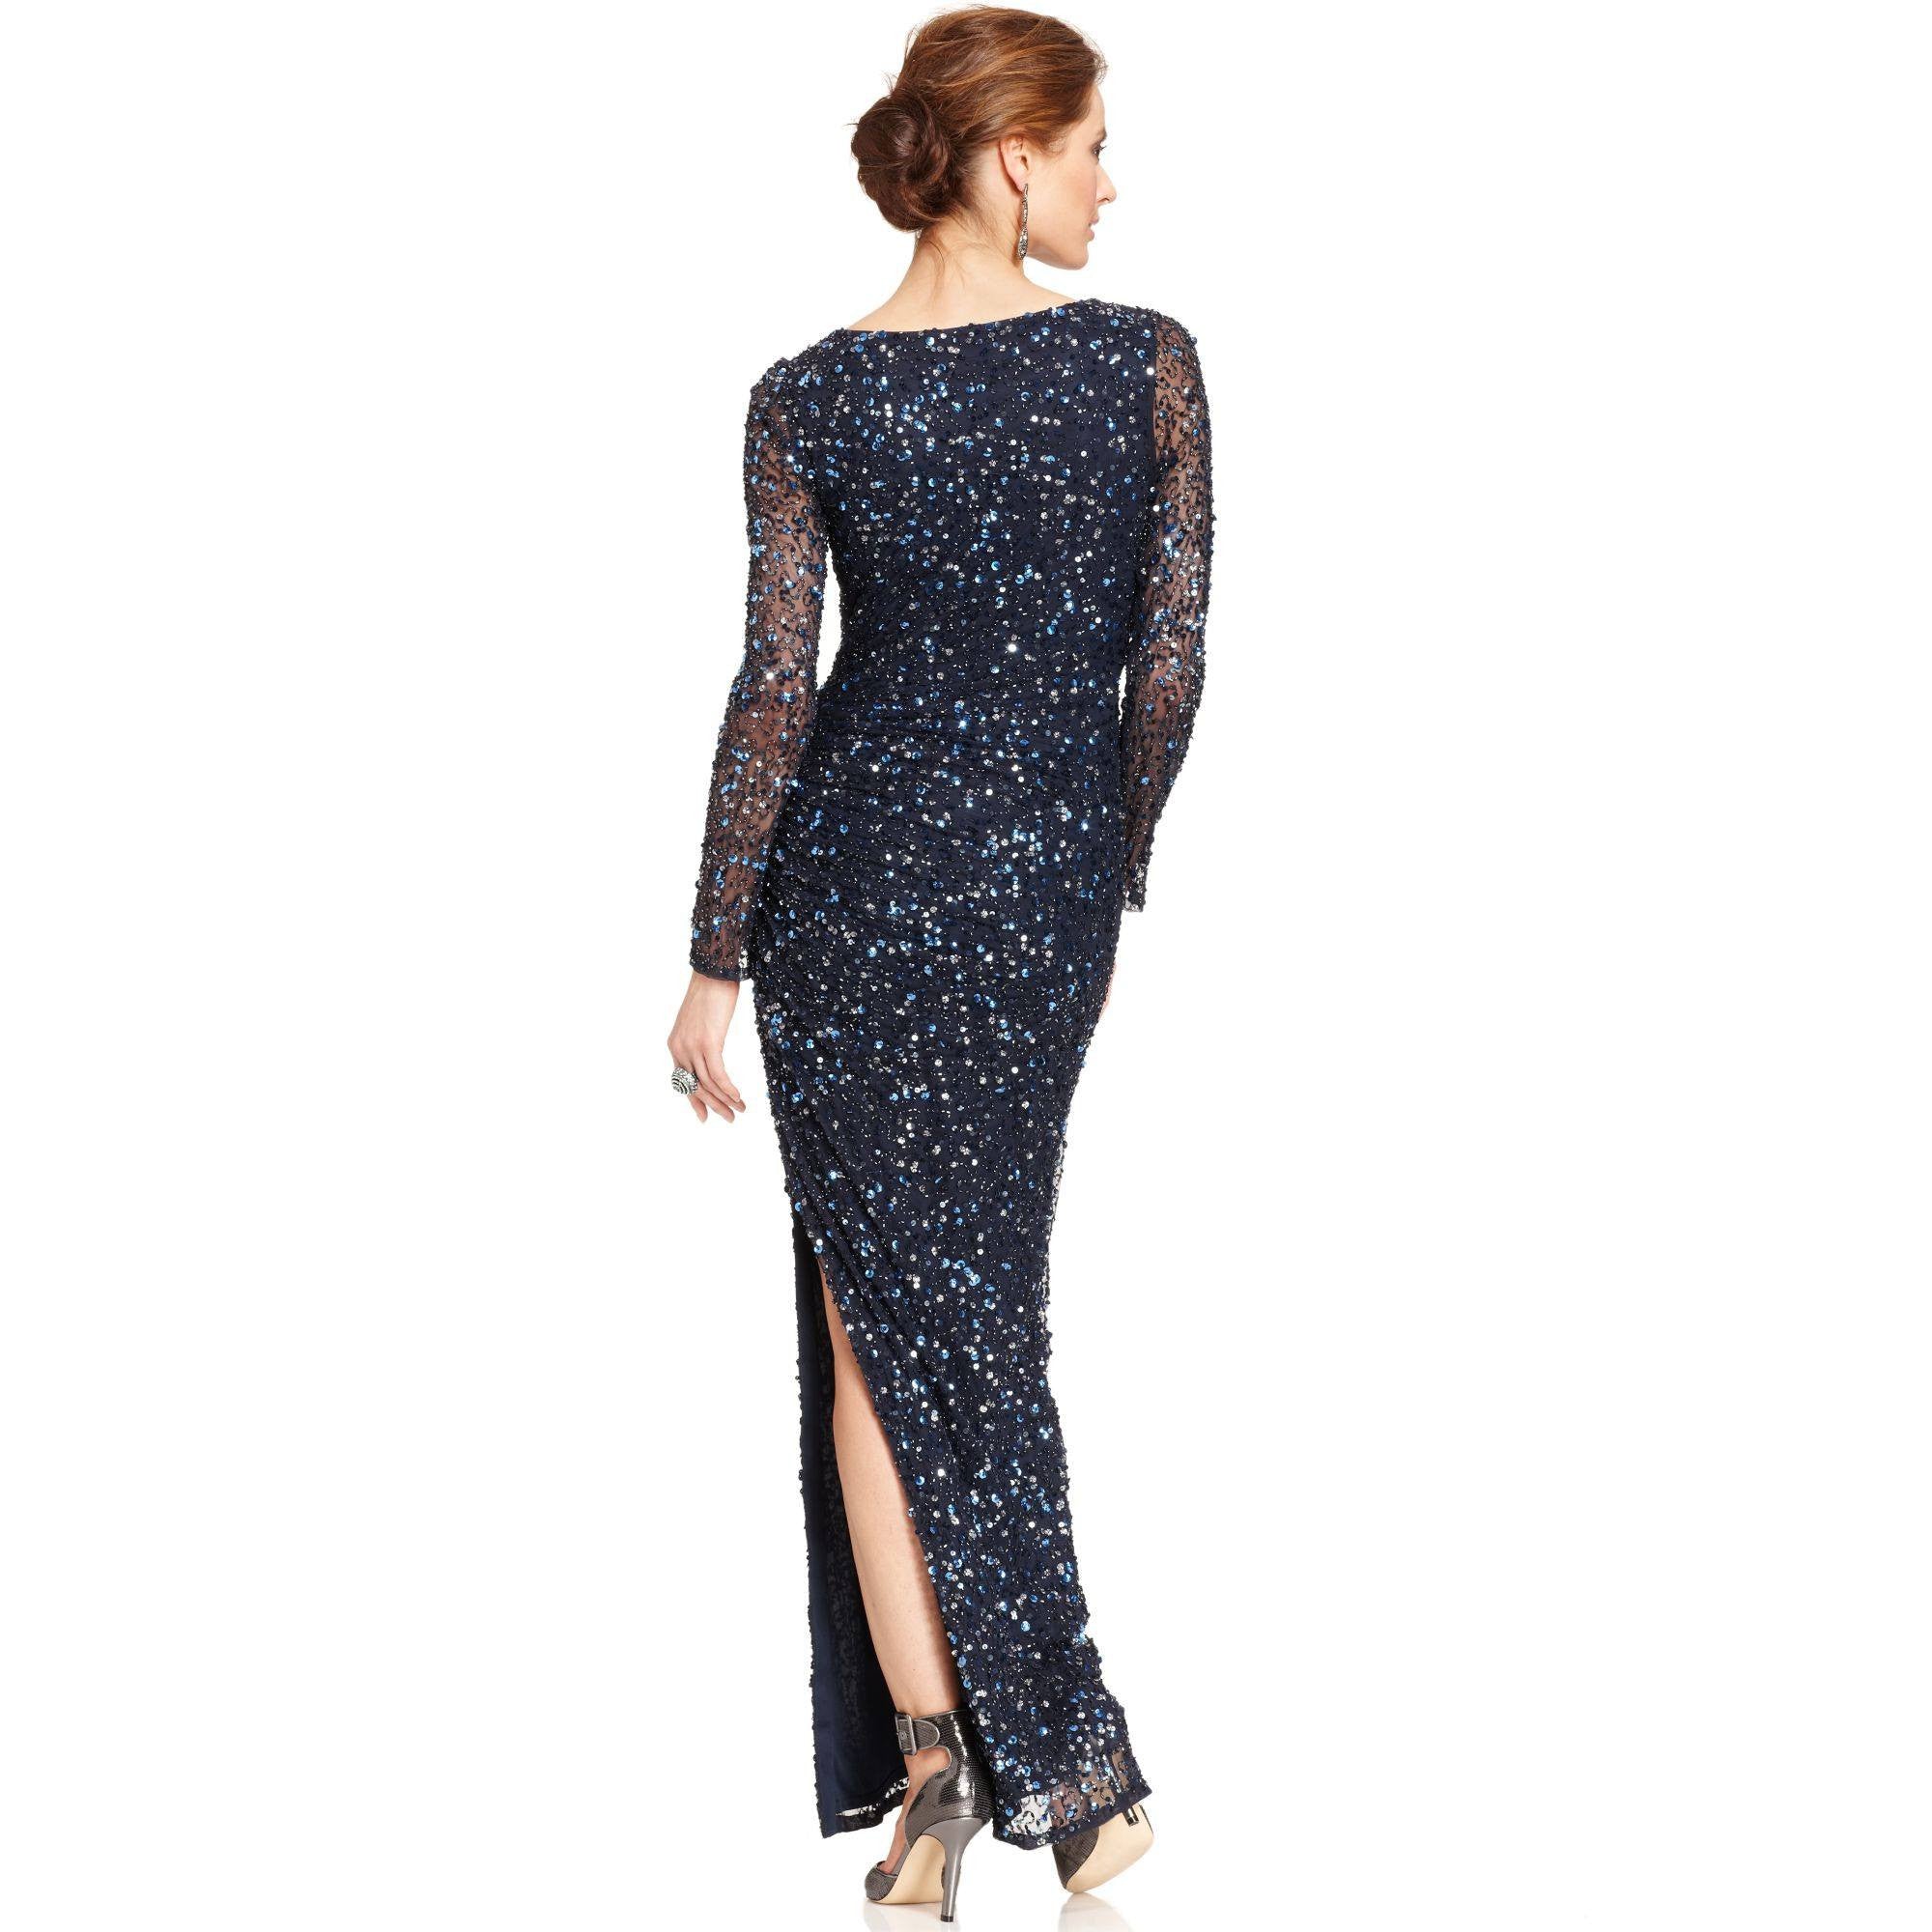 Patra Long Sleeve Sequin Gown Fashionbarn Shop 7874